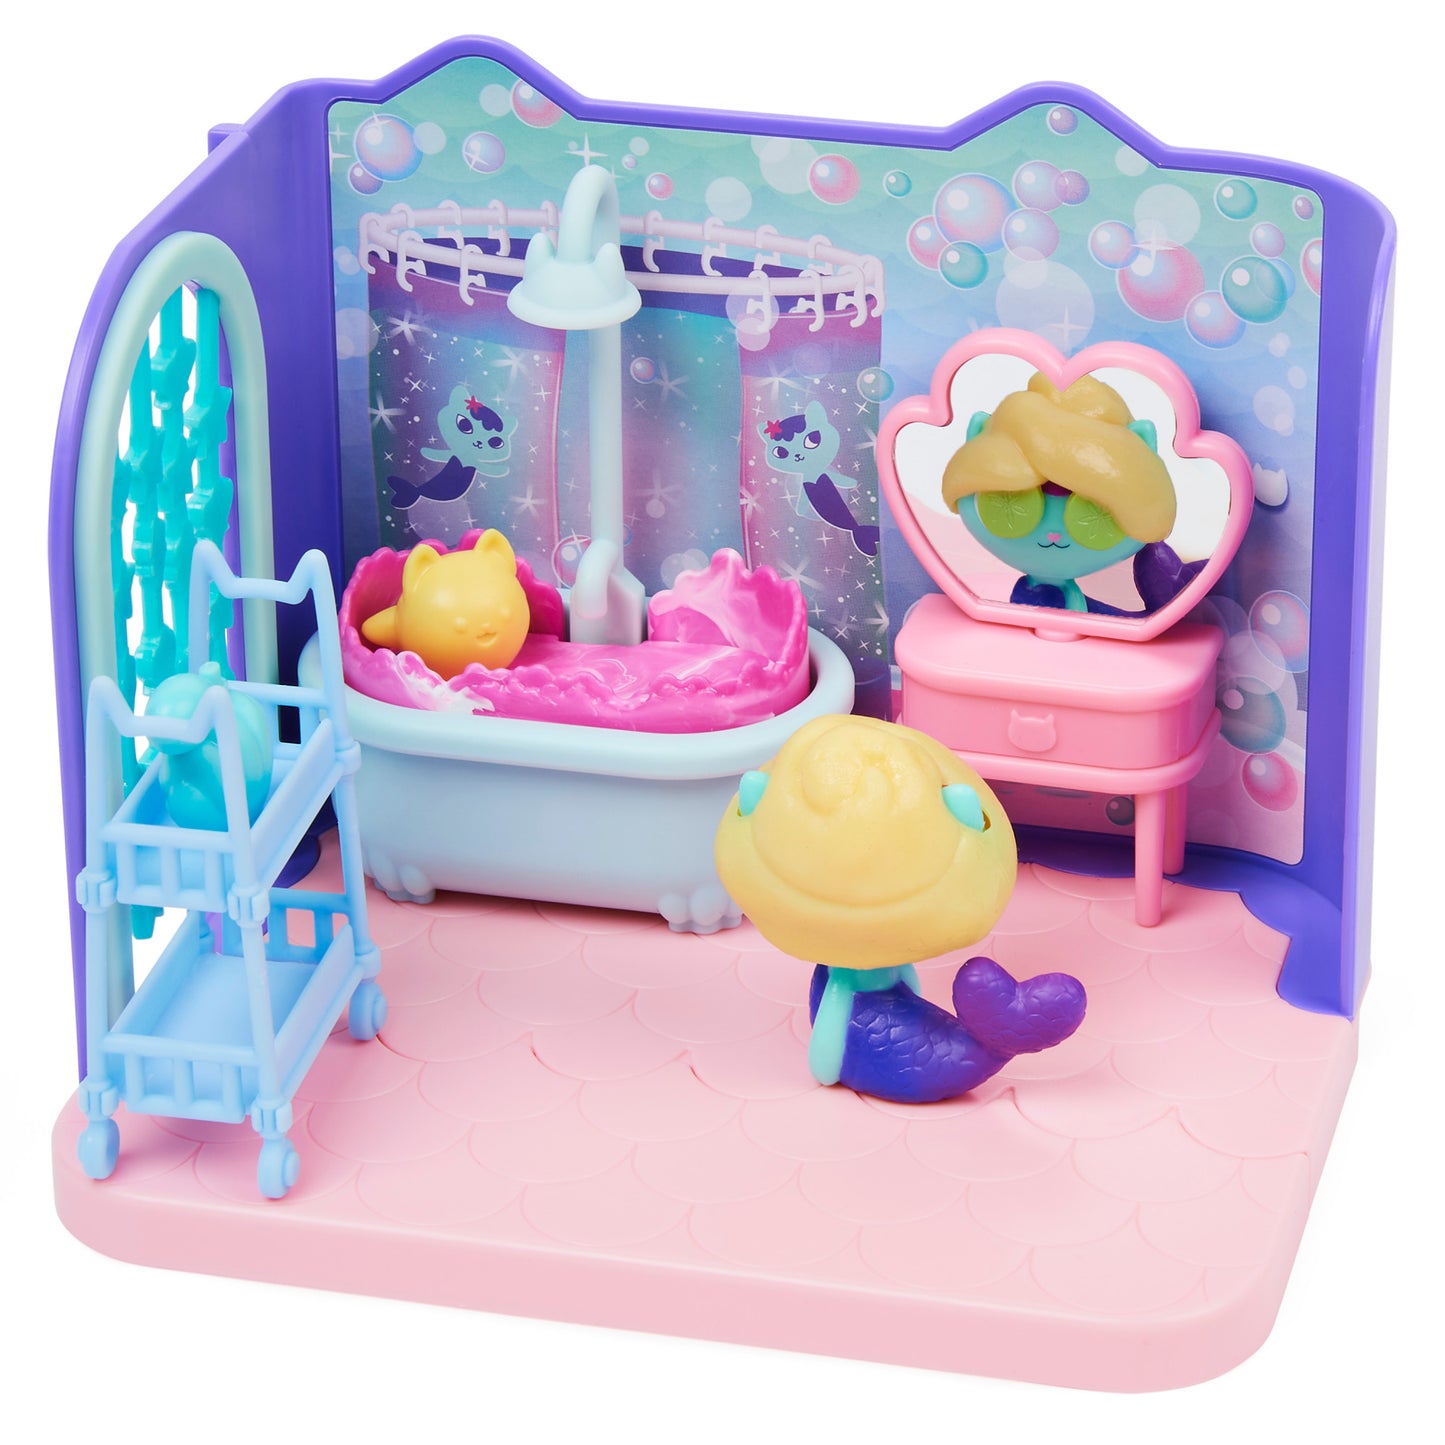 Gabby’s Dollhouse, MerCat’s Primp and Pamper Bathroom Playset for Dollhouse